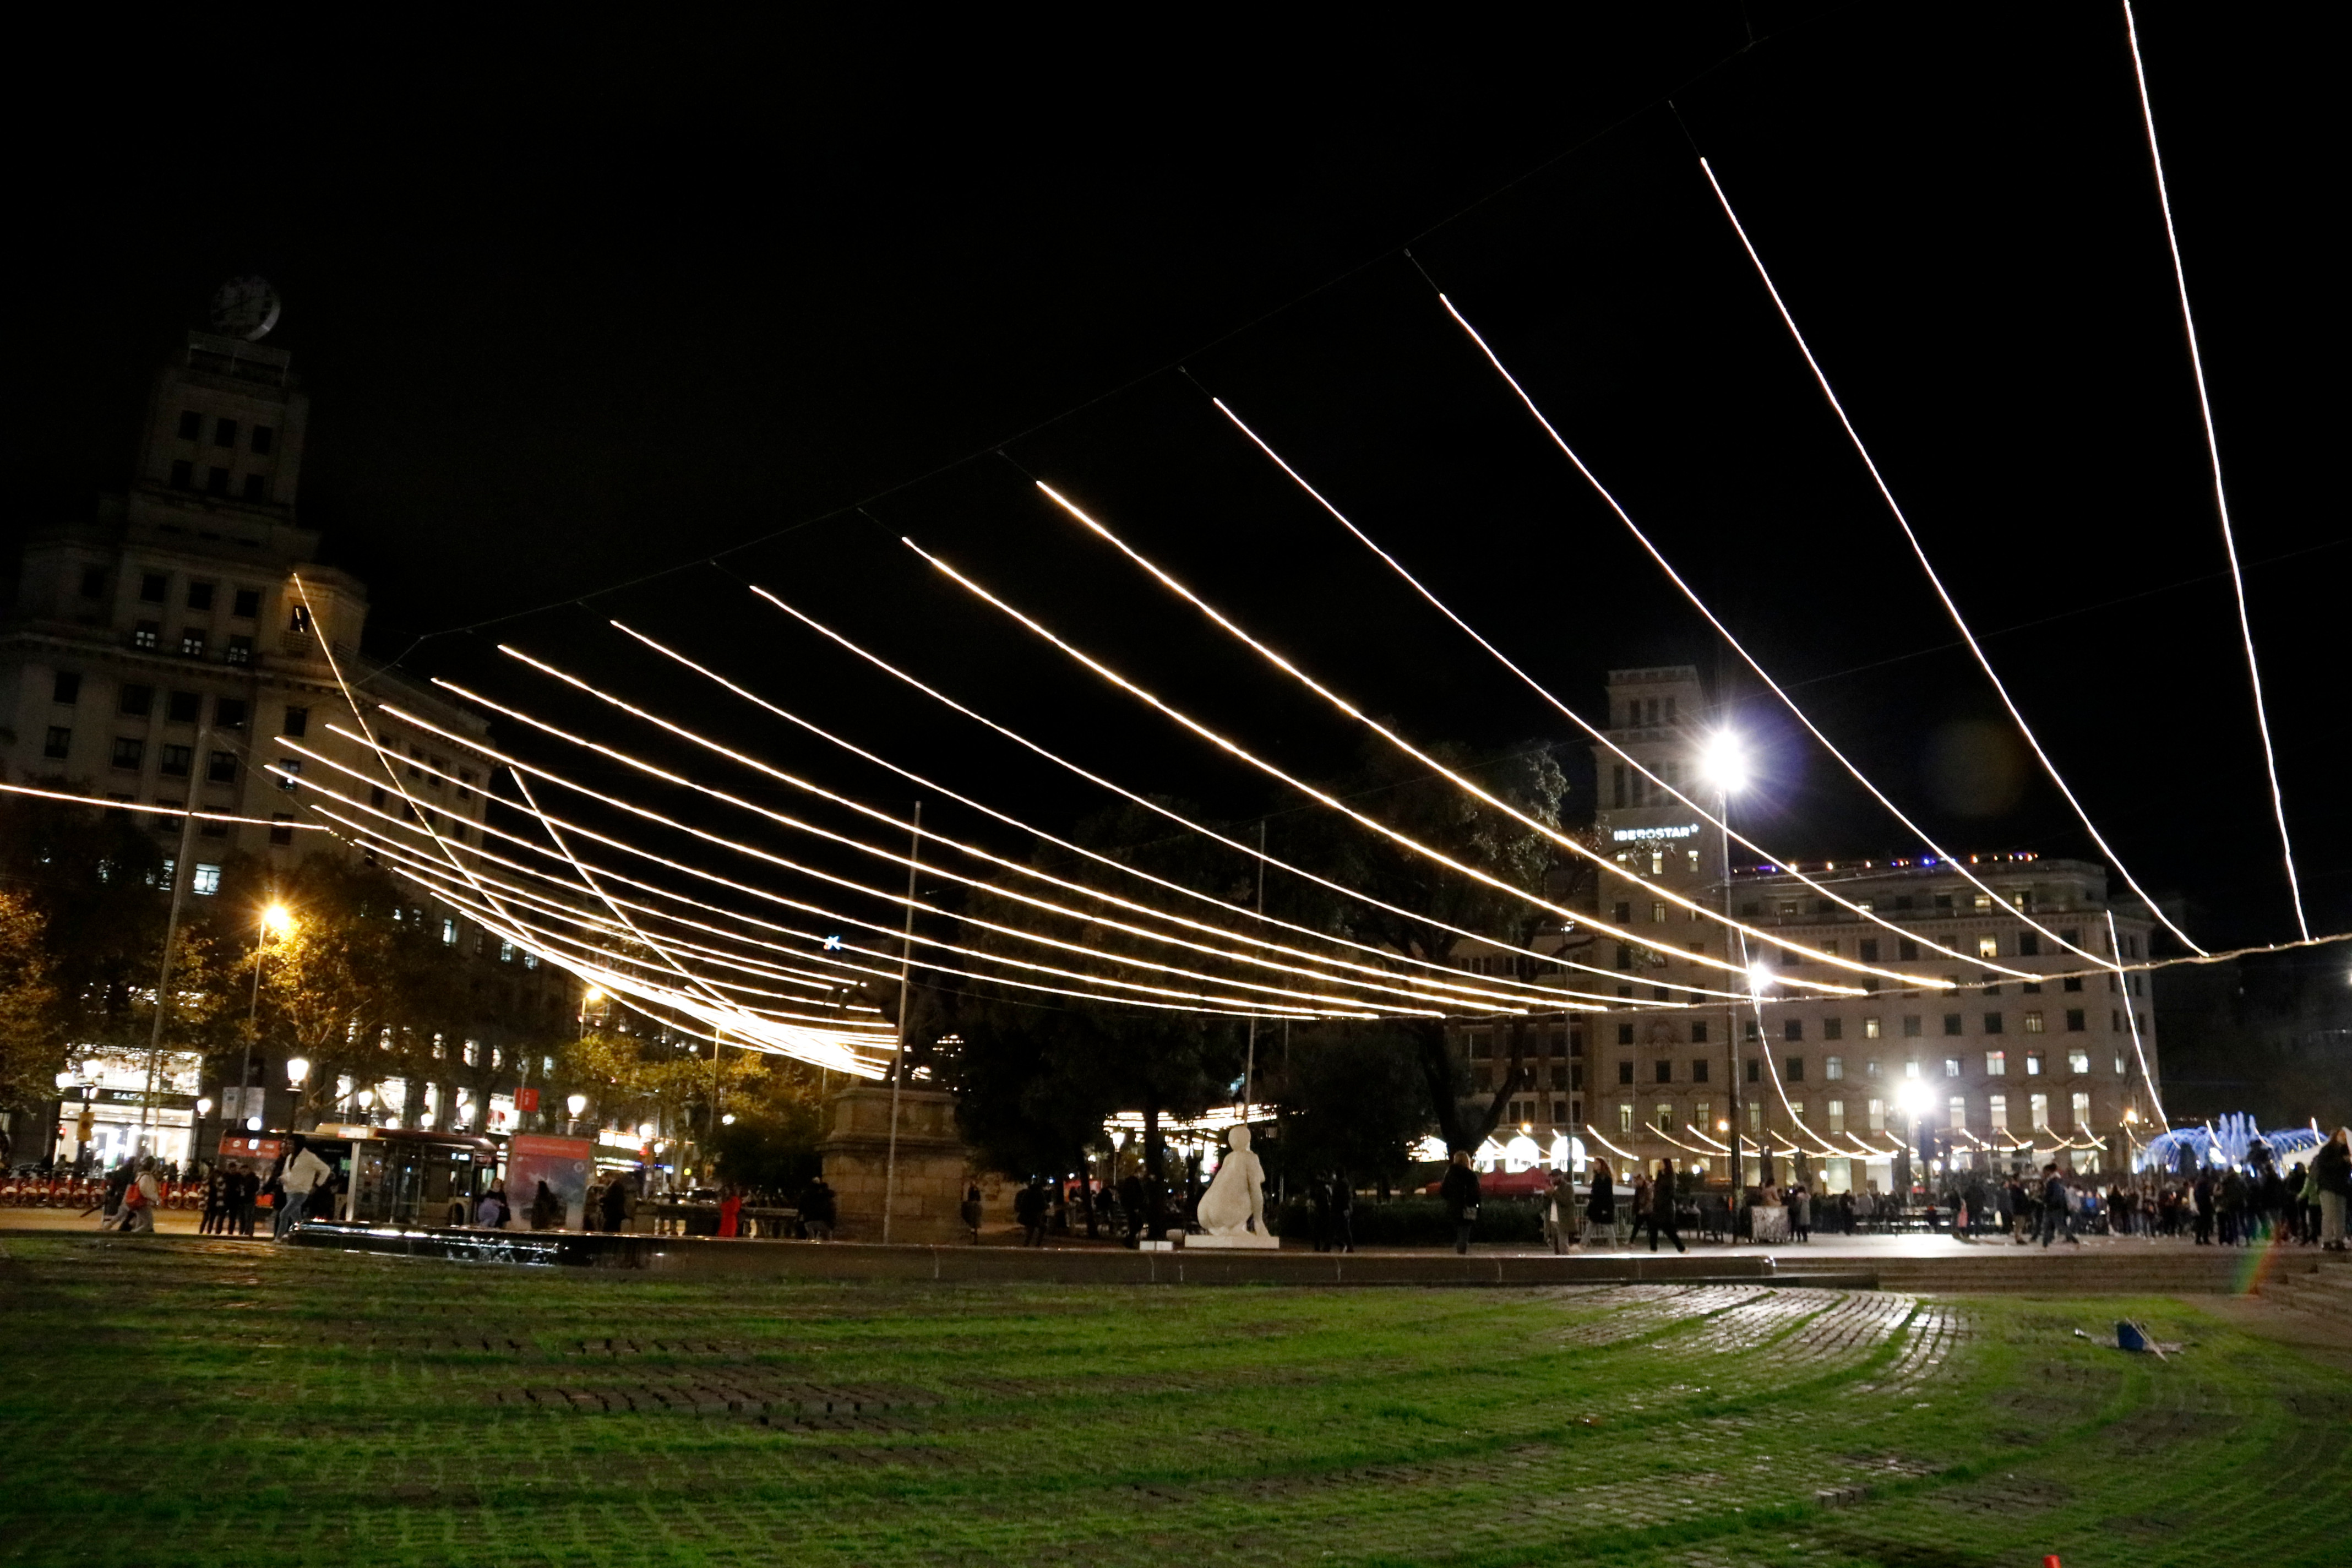 Plaça de Catalunya square Christmas lights on November 24, 2021